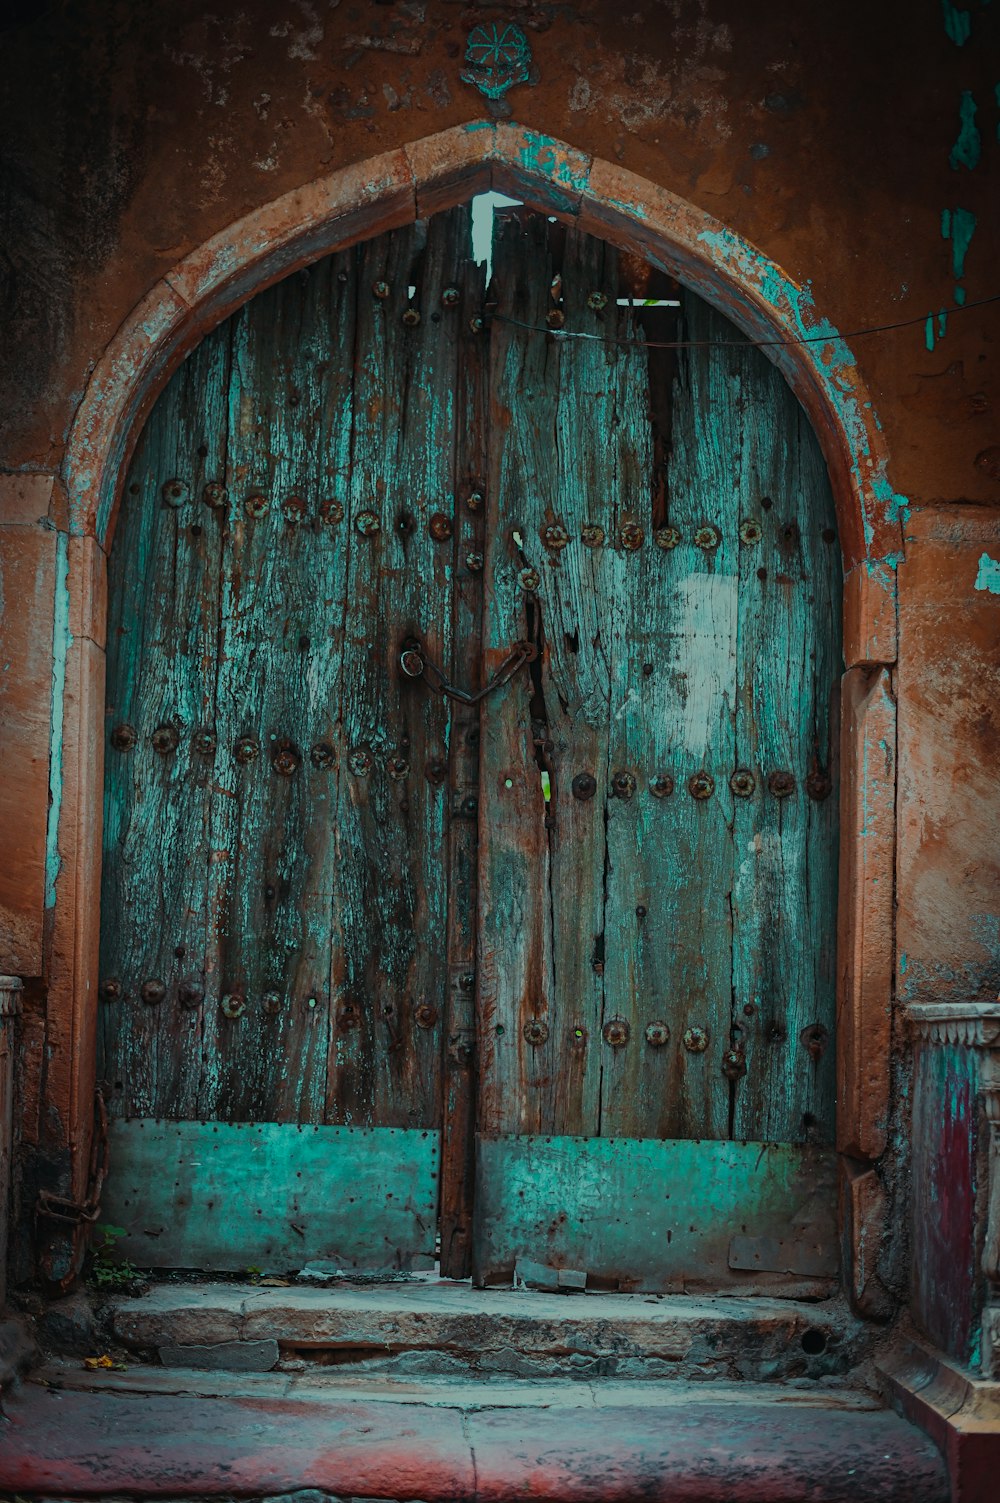 a large green door